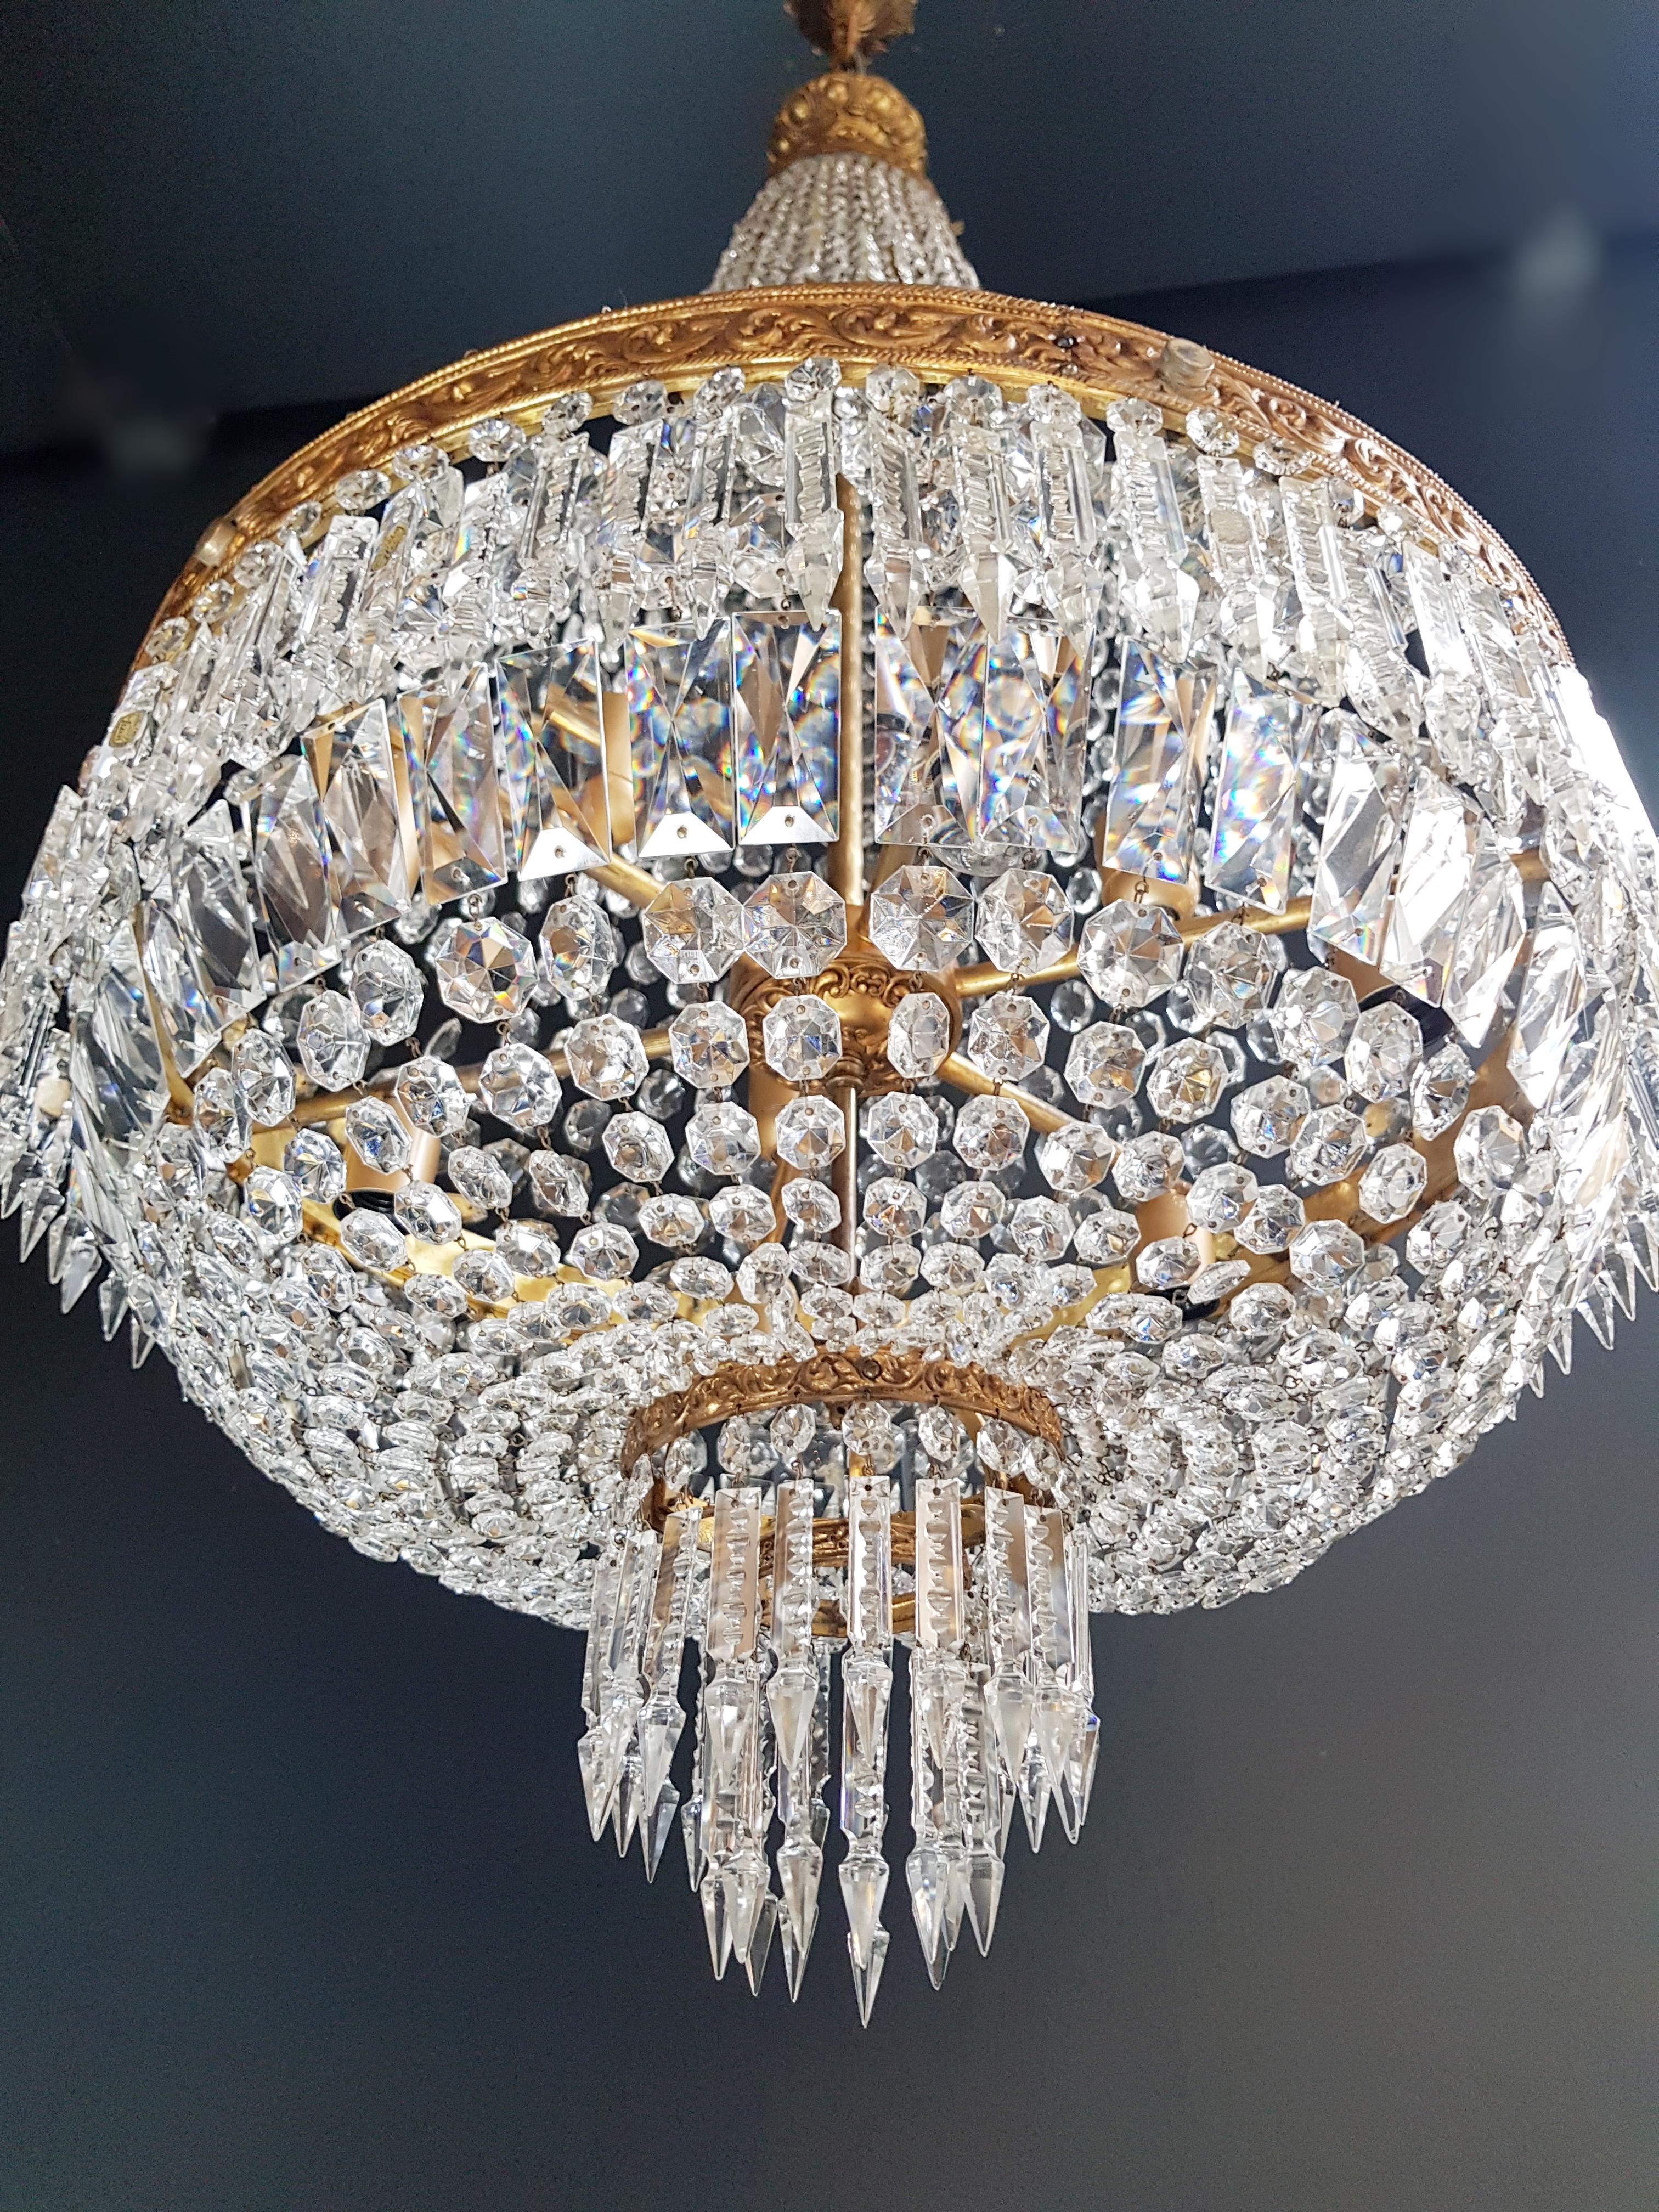 Montgolfiè Empire Brass Sac a Pearl Chandelier Crystal Lustre Ceiling Antique 3